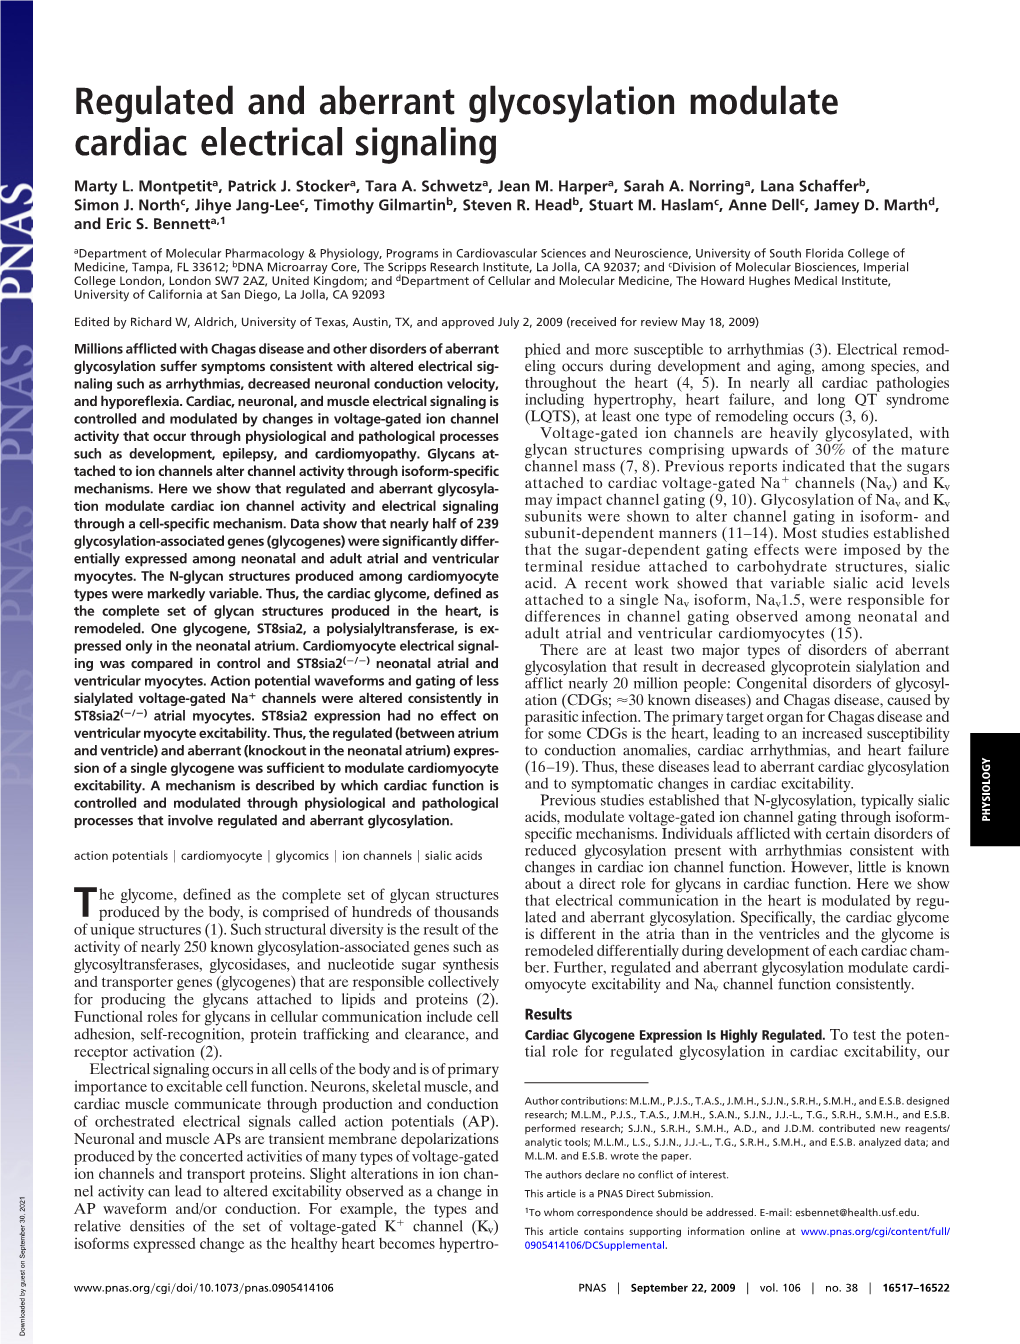 Regulated and Aberrant Glycosylation Modulate Cardiac Electrical Signaling